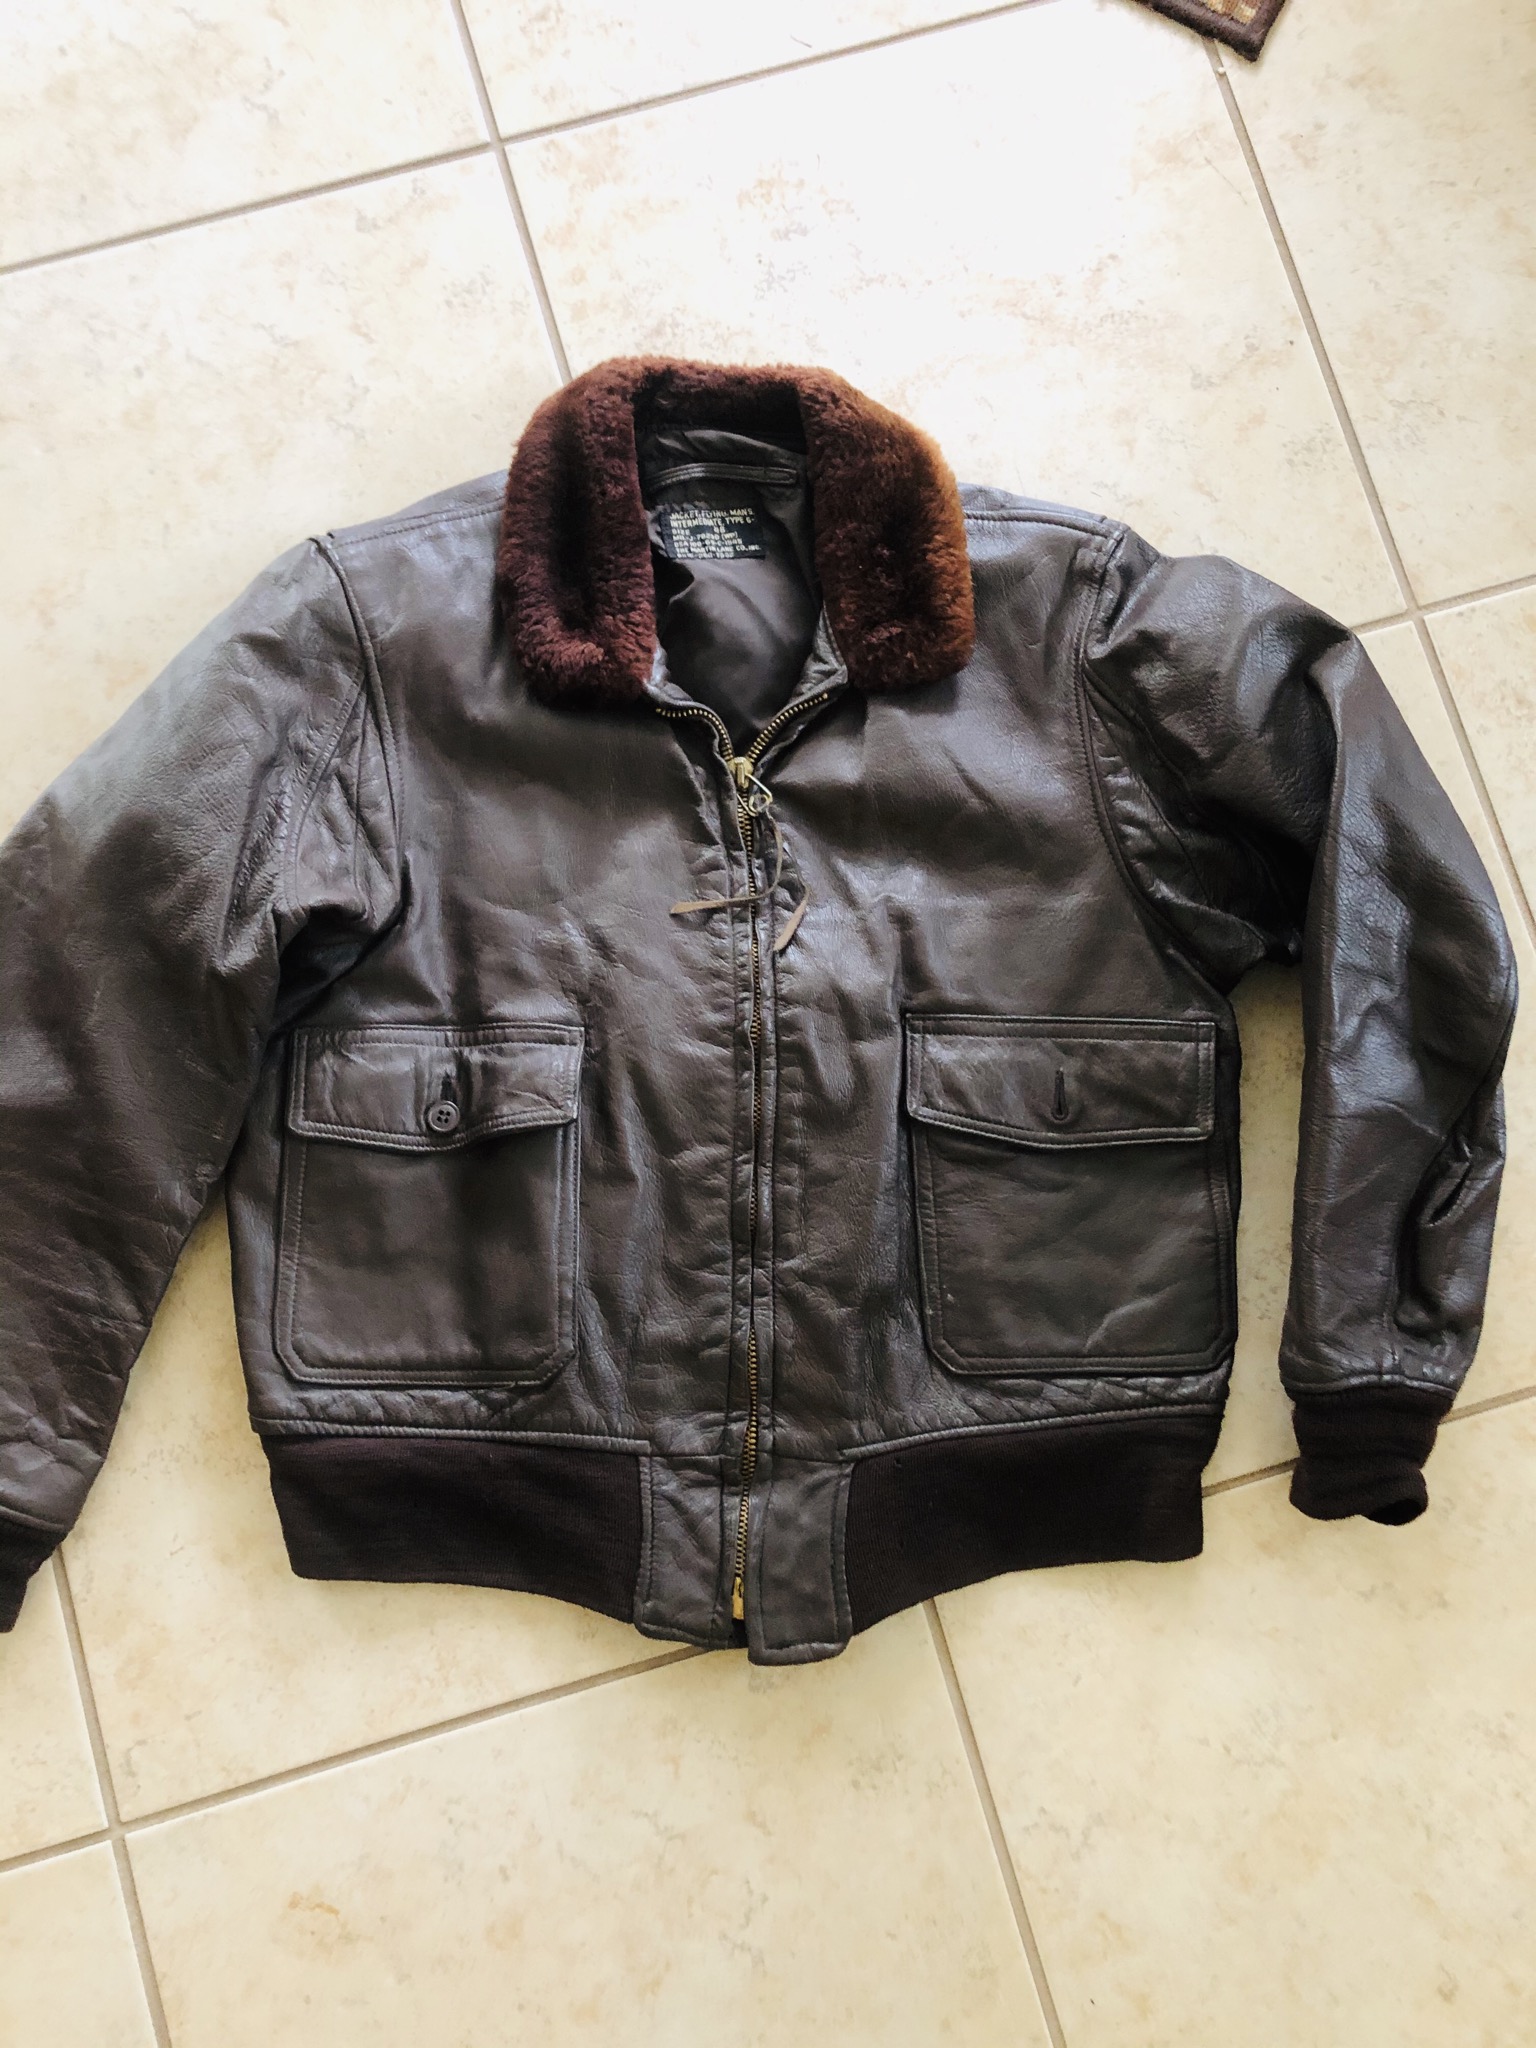 G1 Nametag? | Vintage Leather Jackets Forum